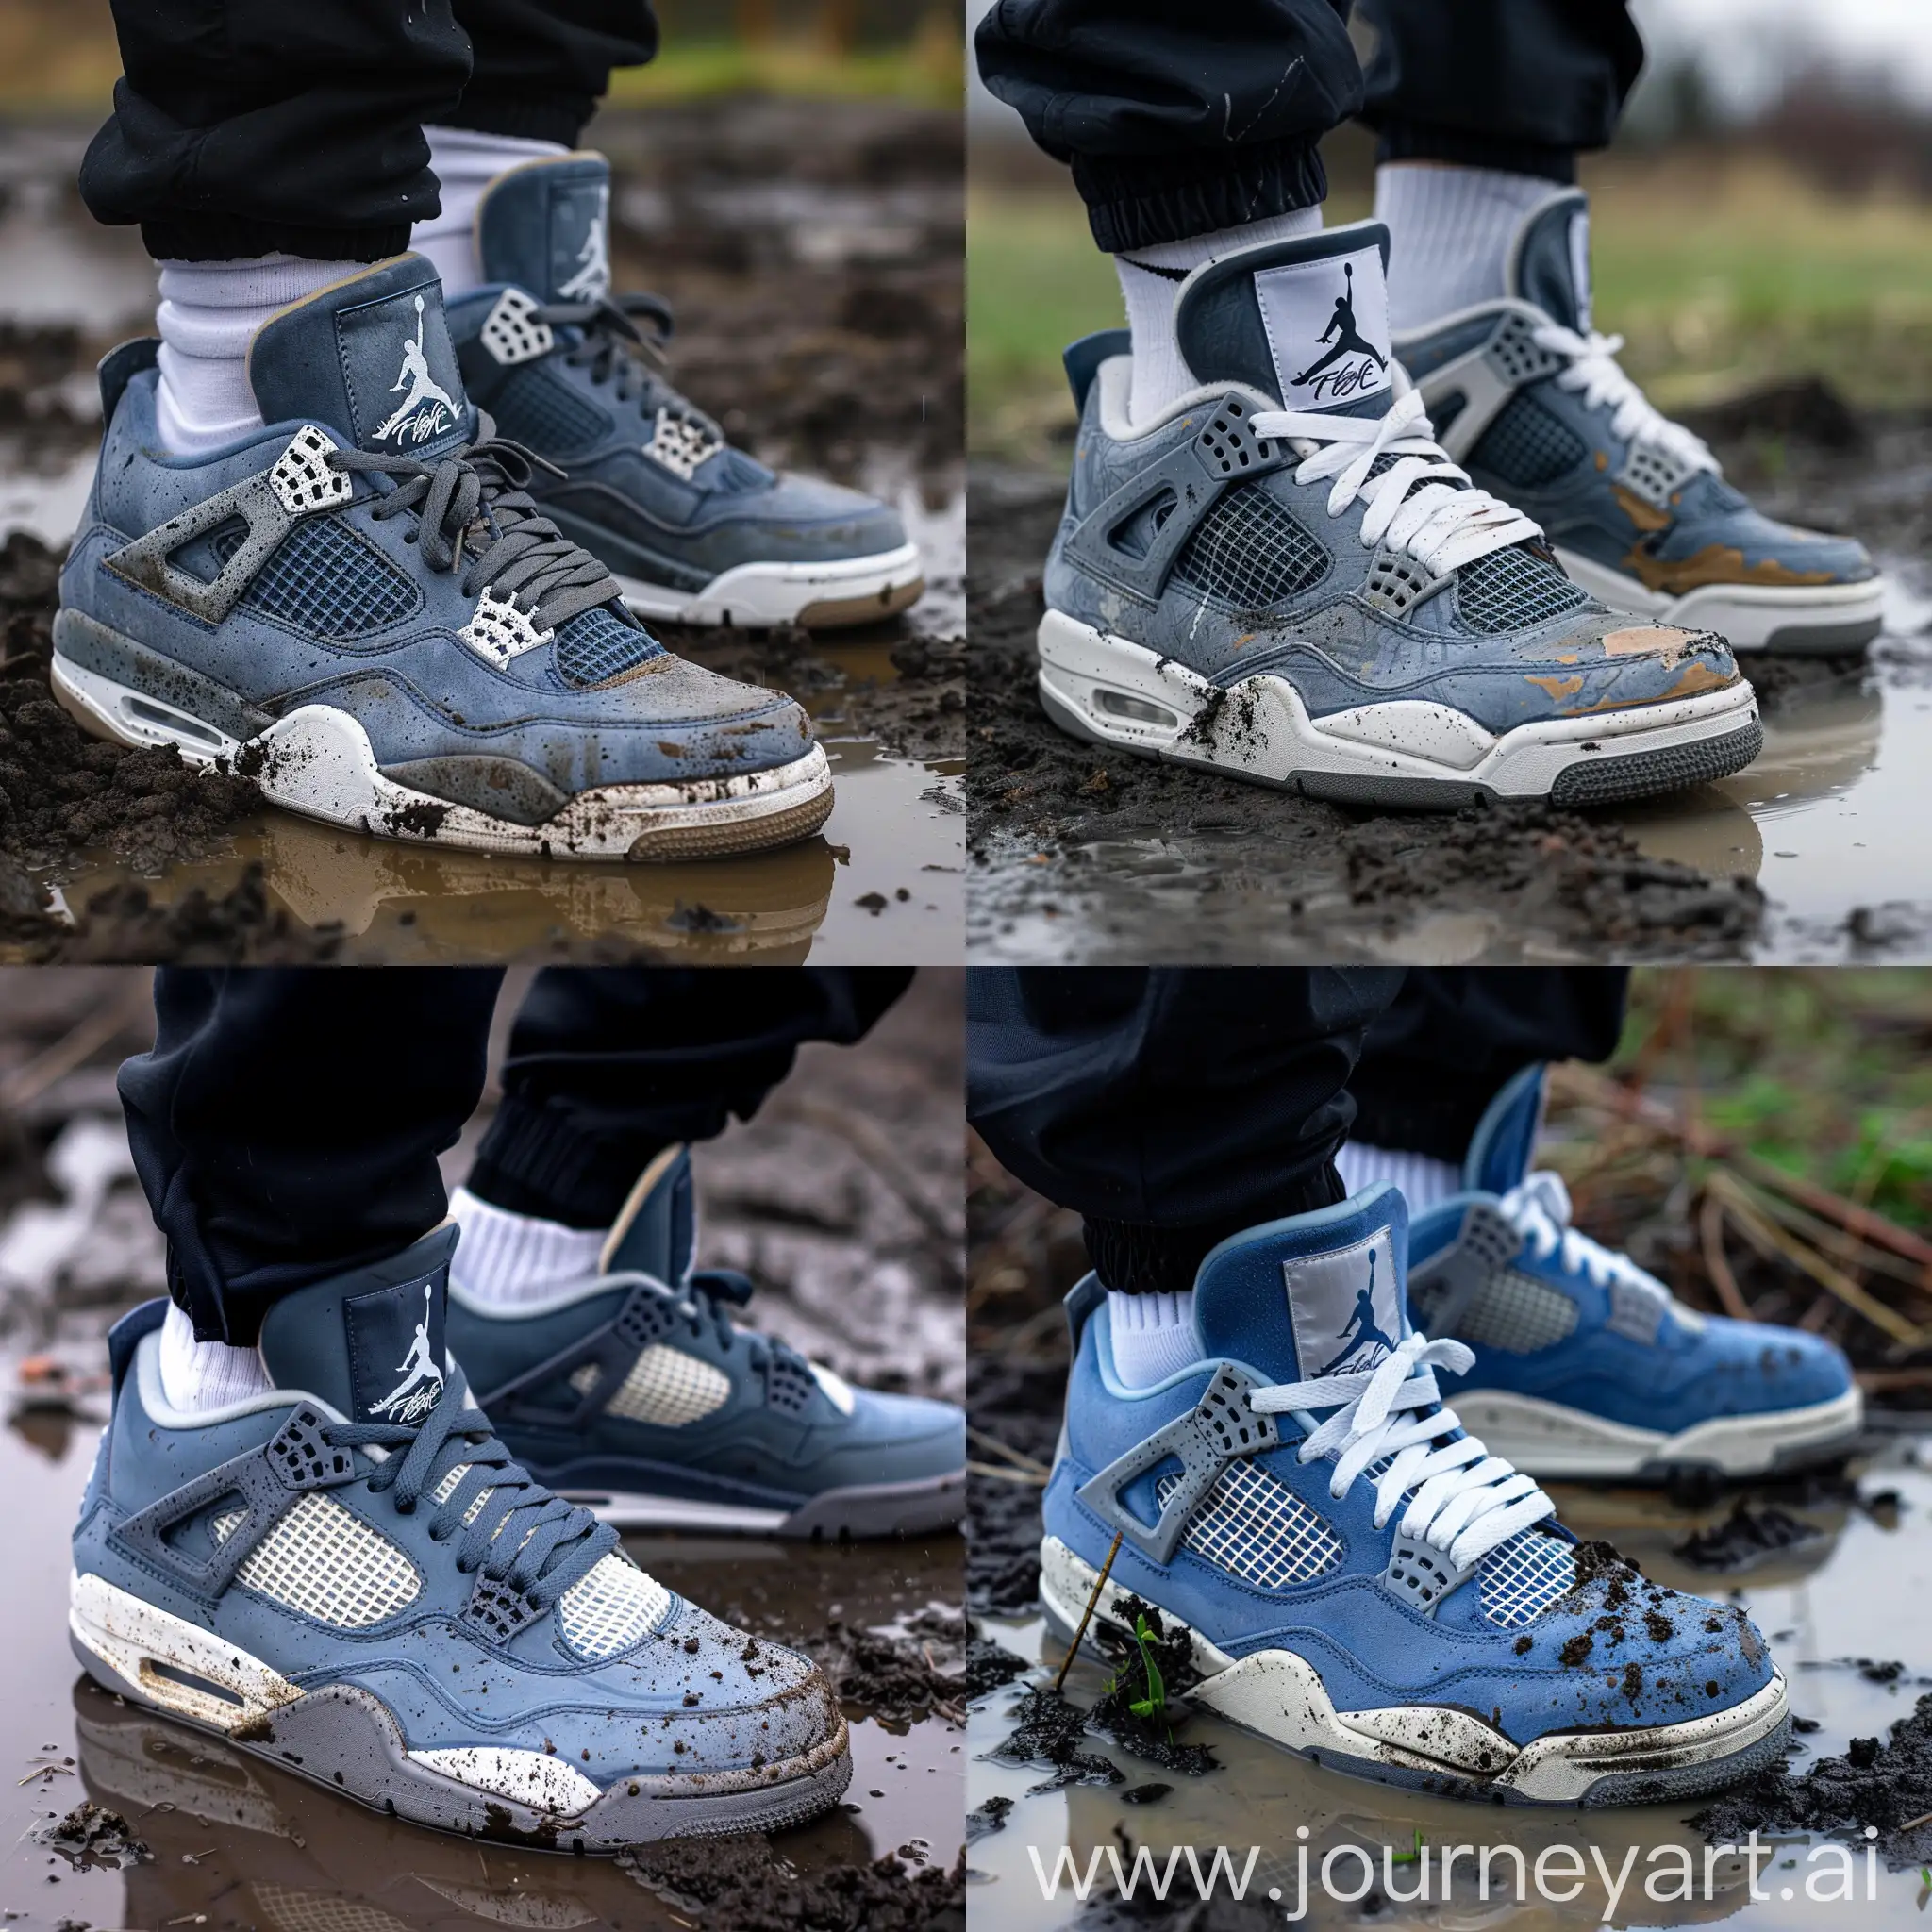 BlueGray-Jordan-4-Sneakers-Get-Dirty-in-Dirt-Puddle